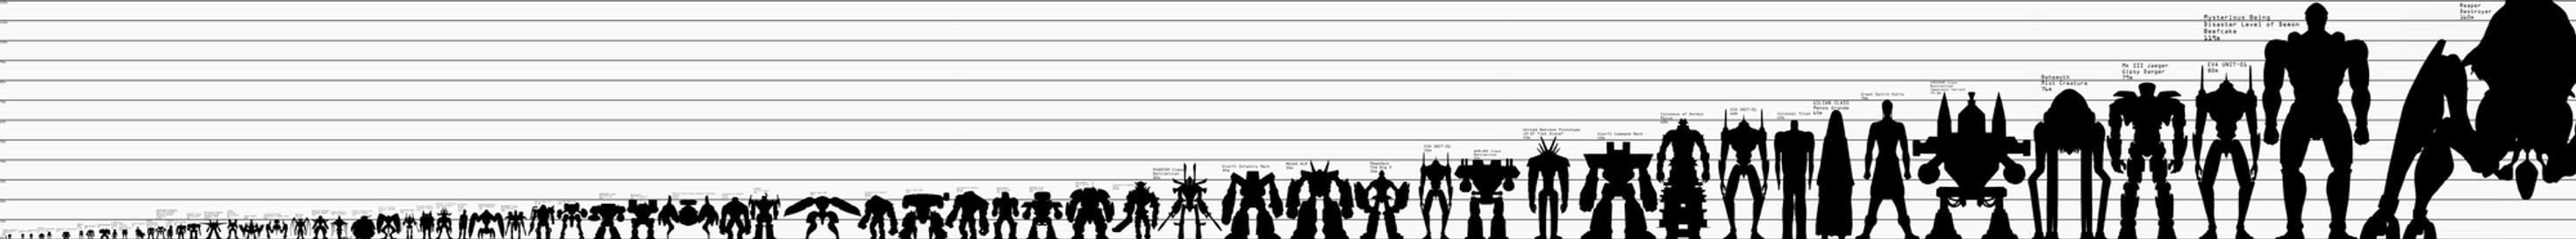 Titan Size Chart Attack On Titan